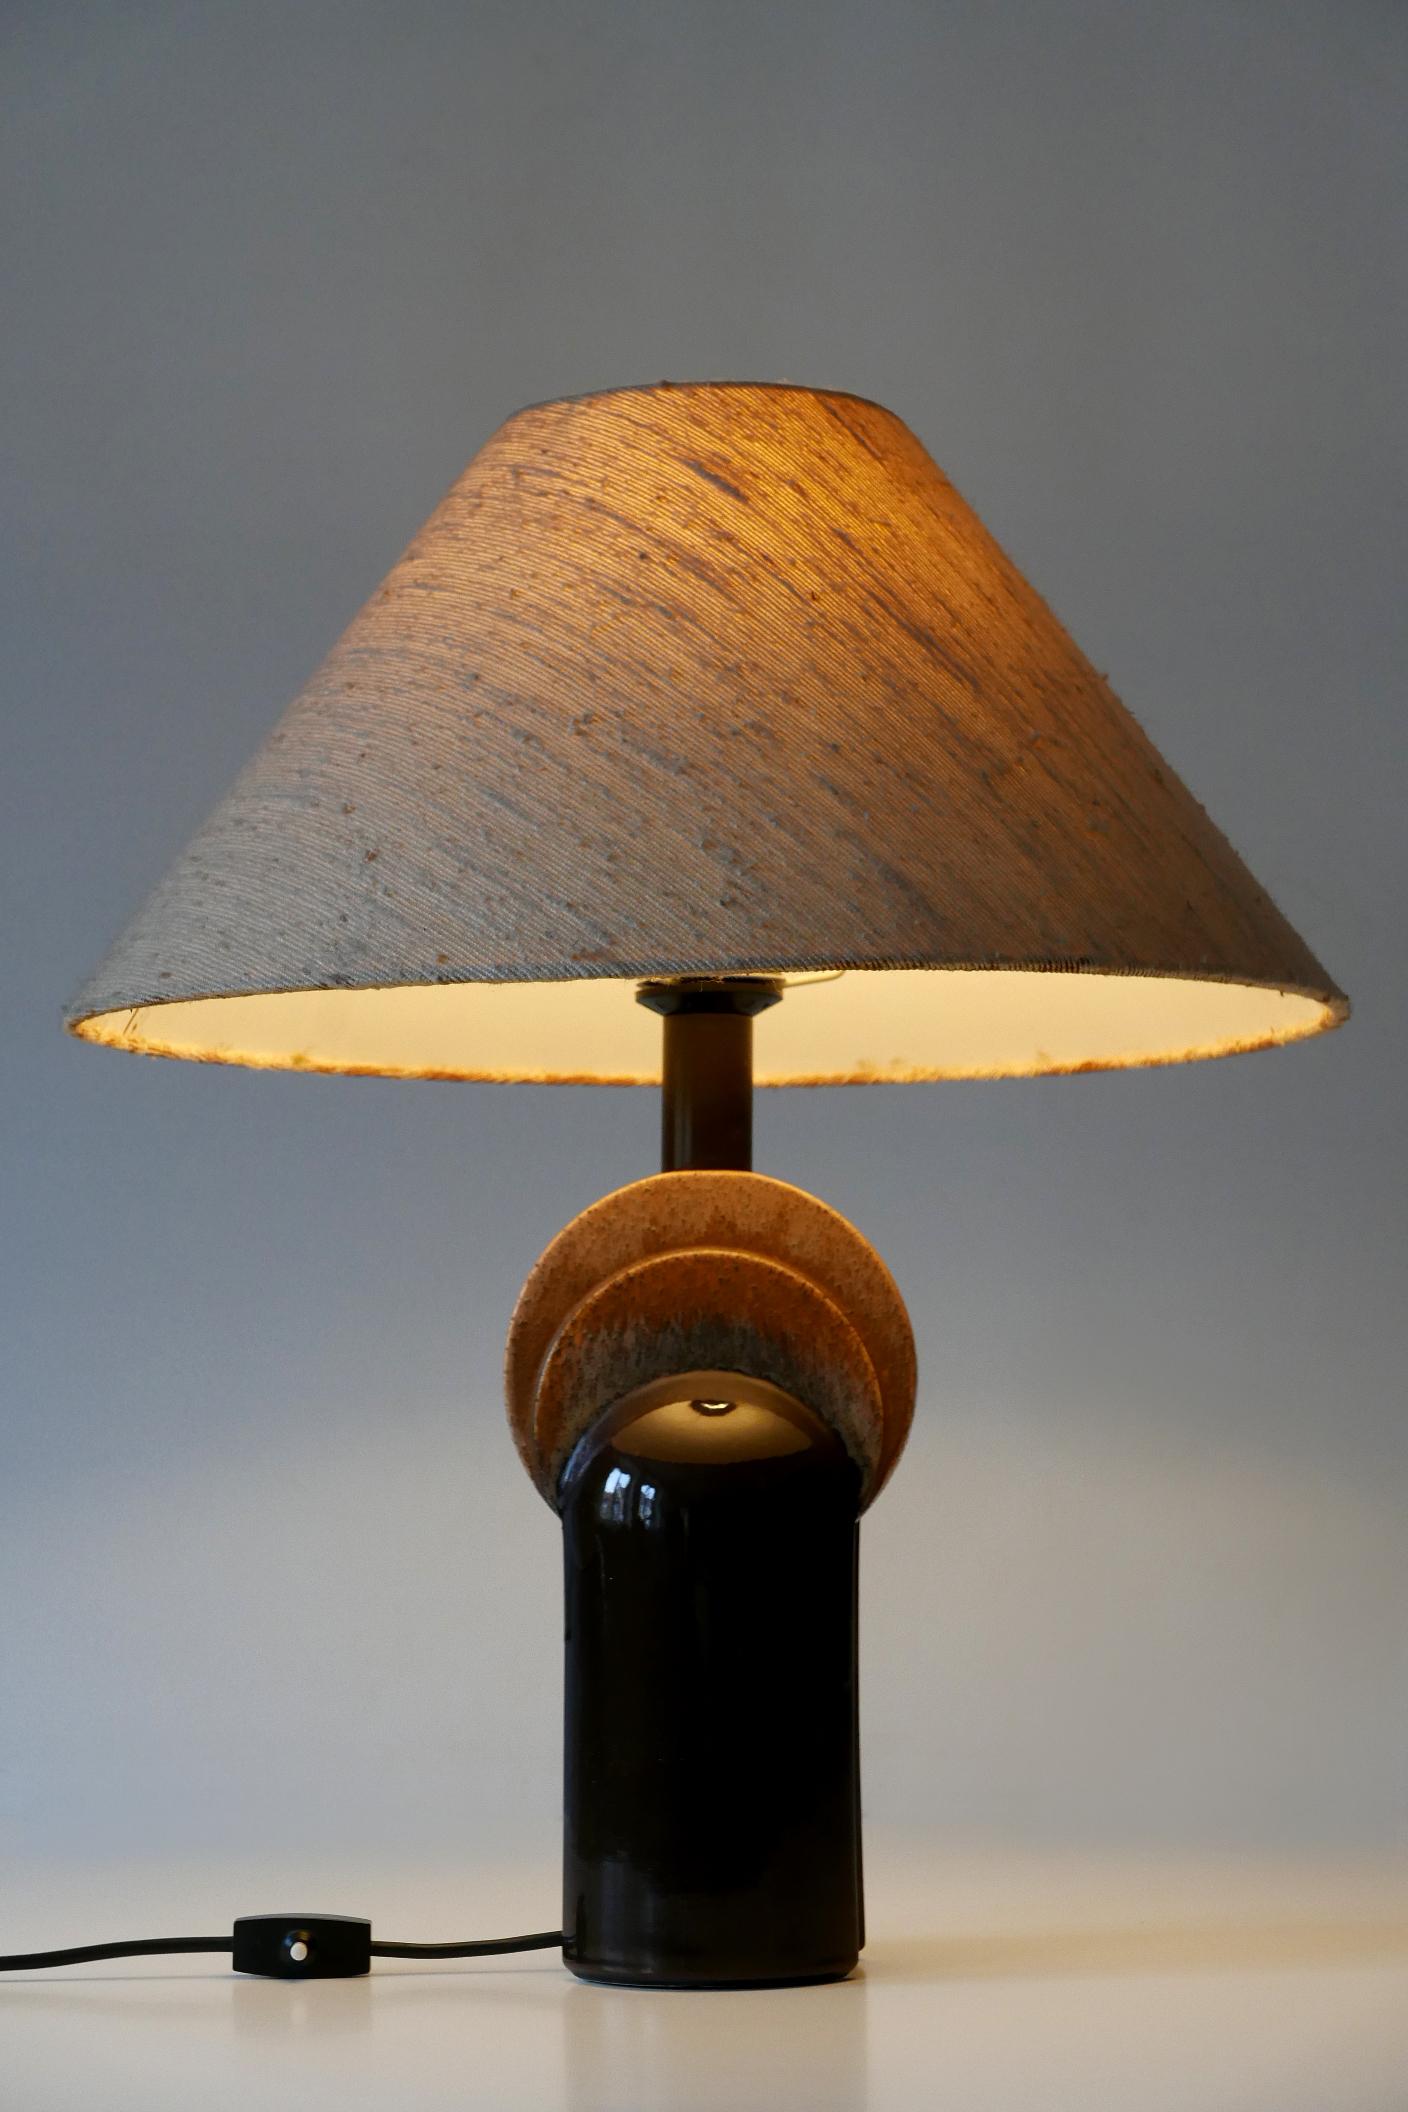 Elegant Mid-Century Modern Ceramic Table Lamp by Leola Design Germany 1960s For Sale 9